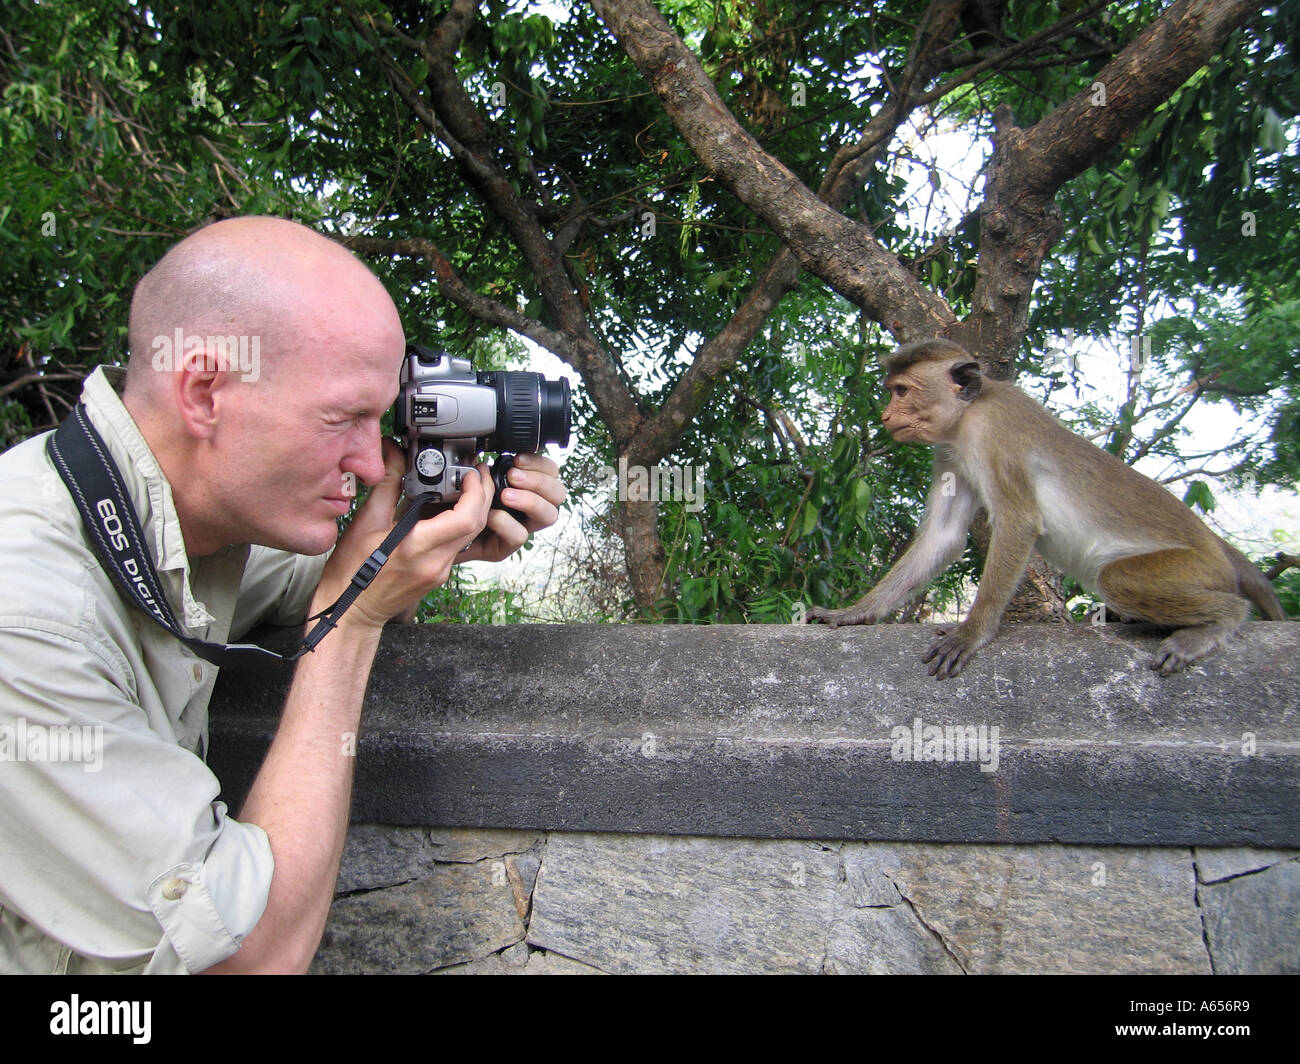 Sri Lanka Temple Monkey at Dambulla Cave, Toque Monkey, Macaque Monkey looking into the camera Stock Photo